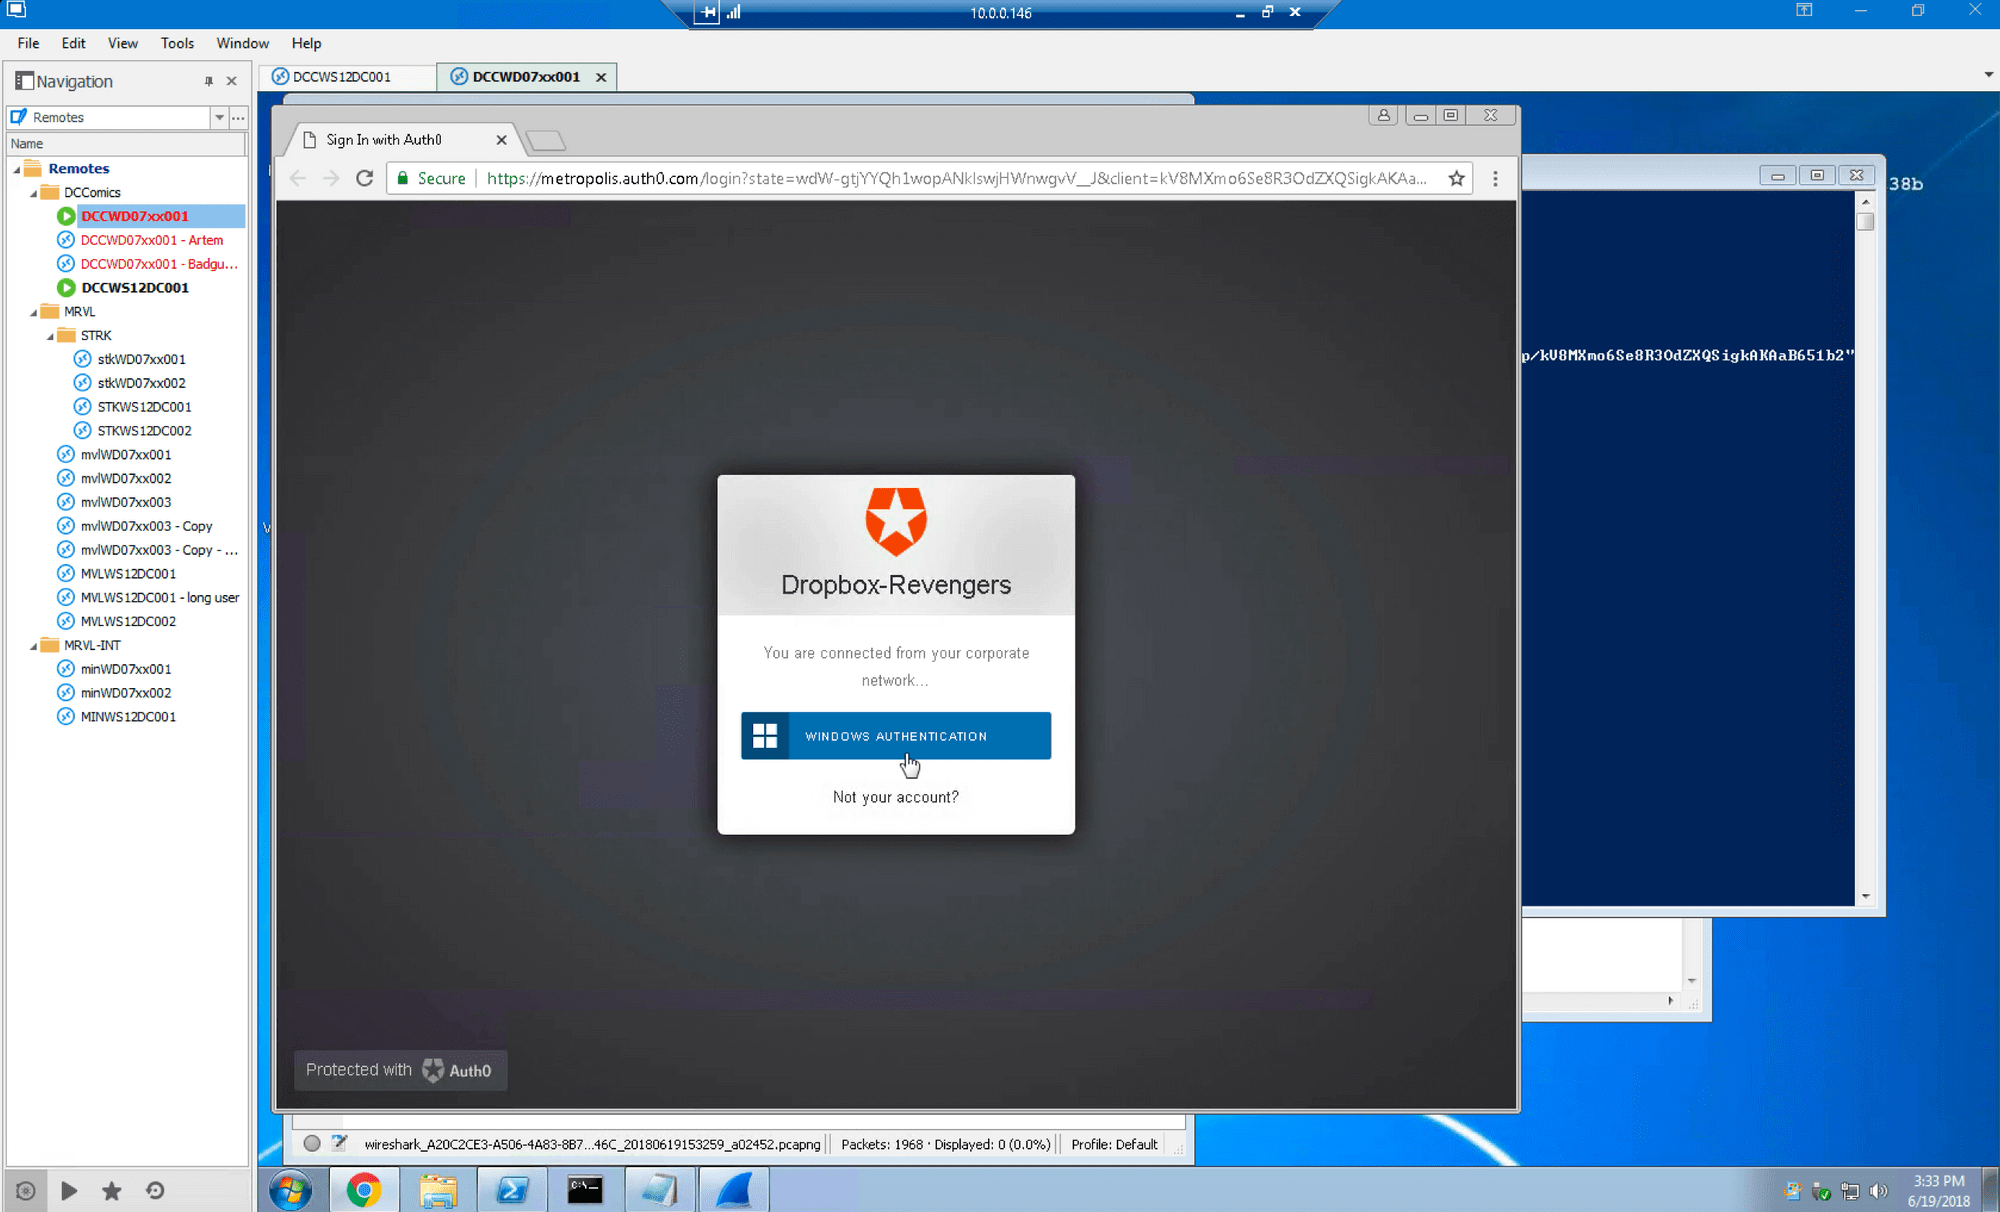 Dropbox login window